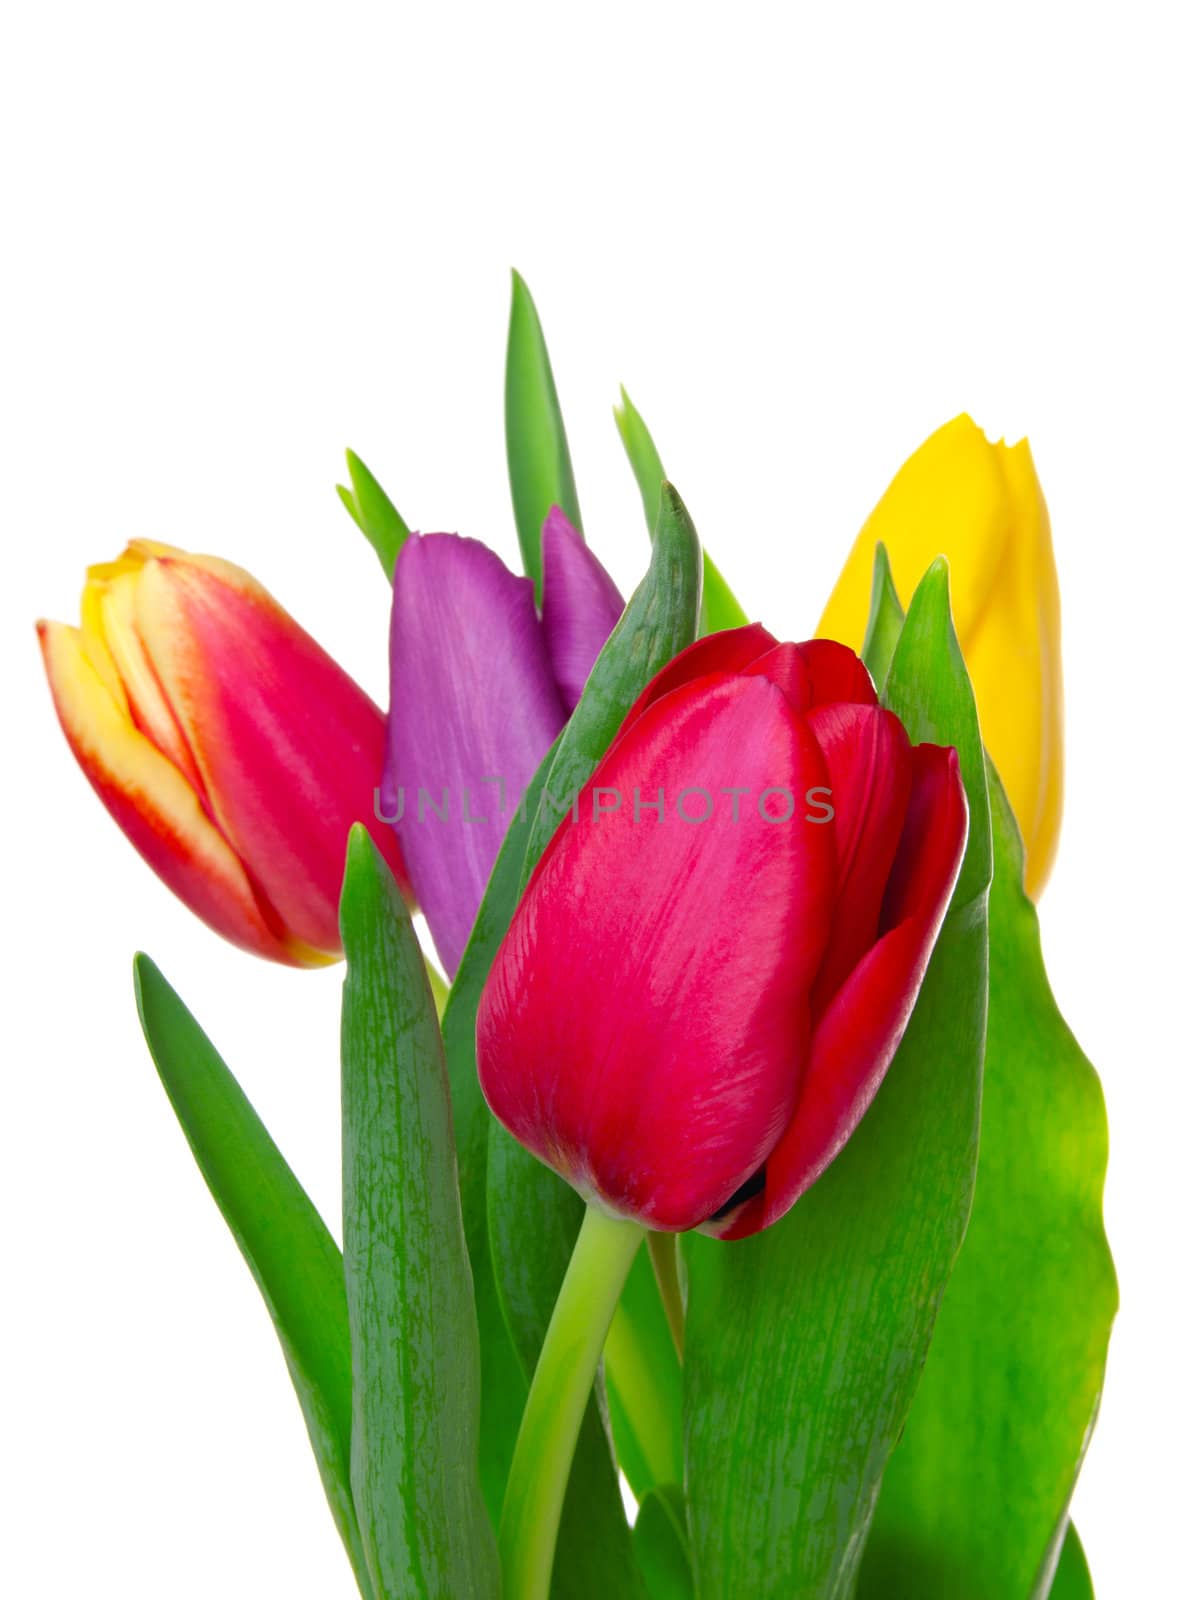 tulips on isolated background  by motorolka